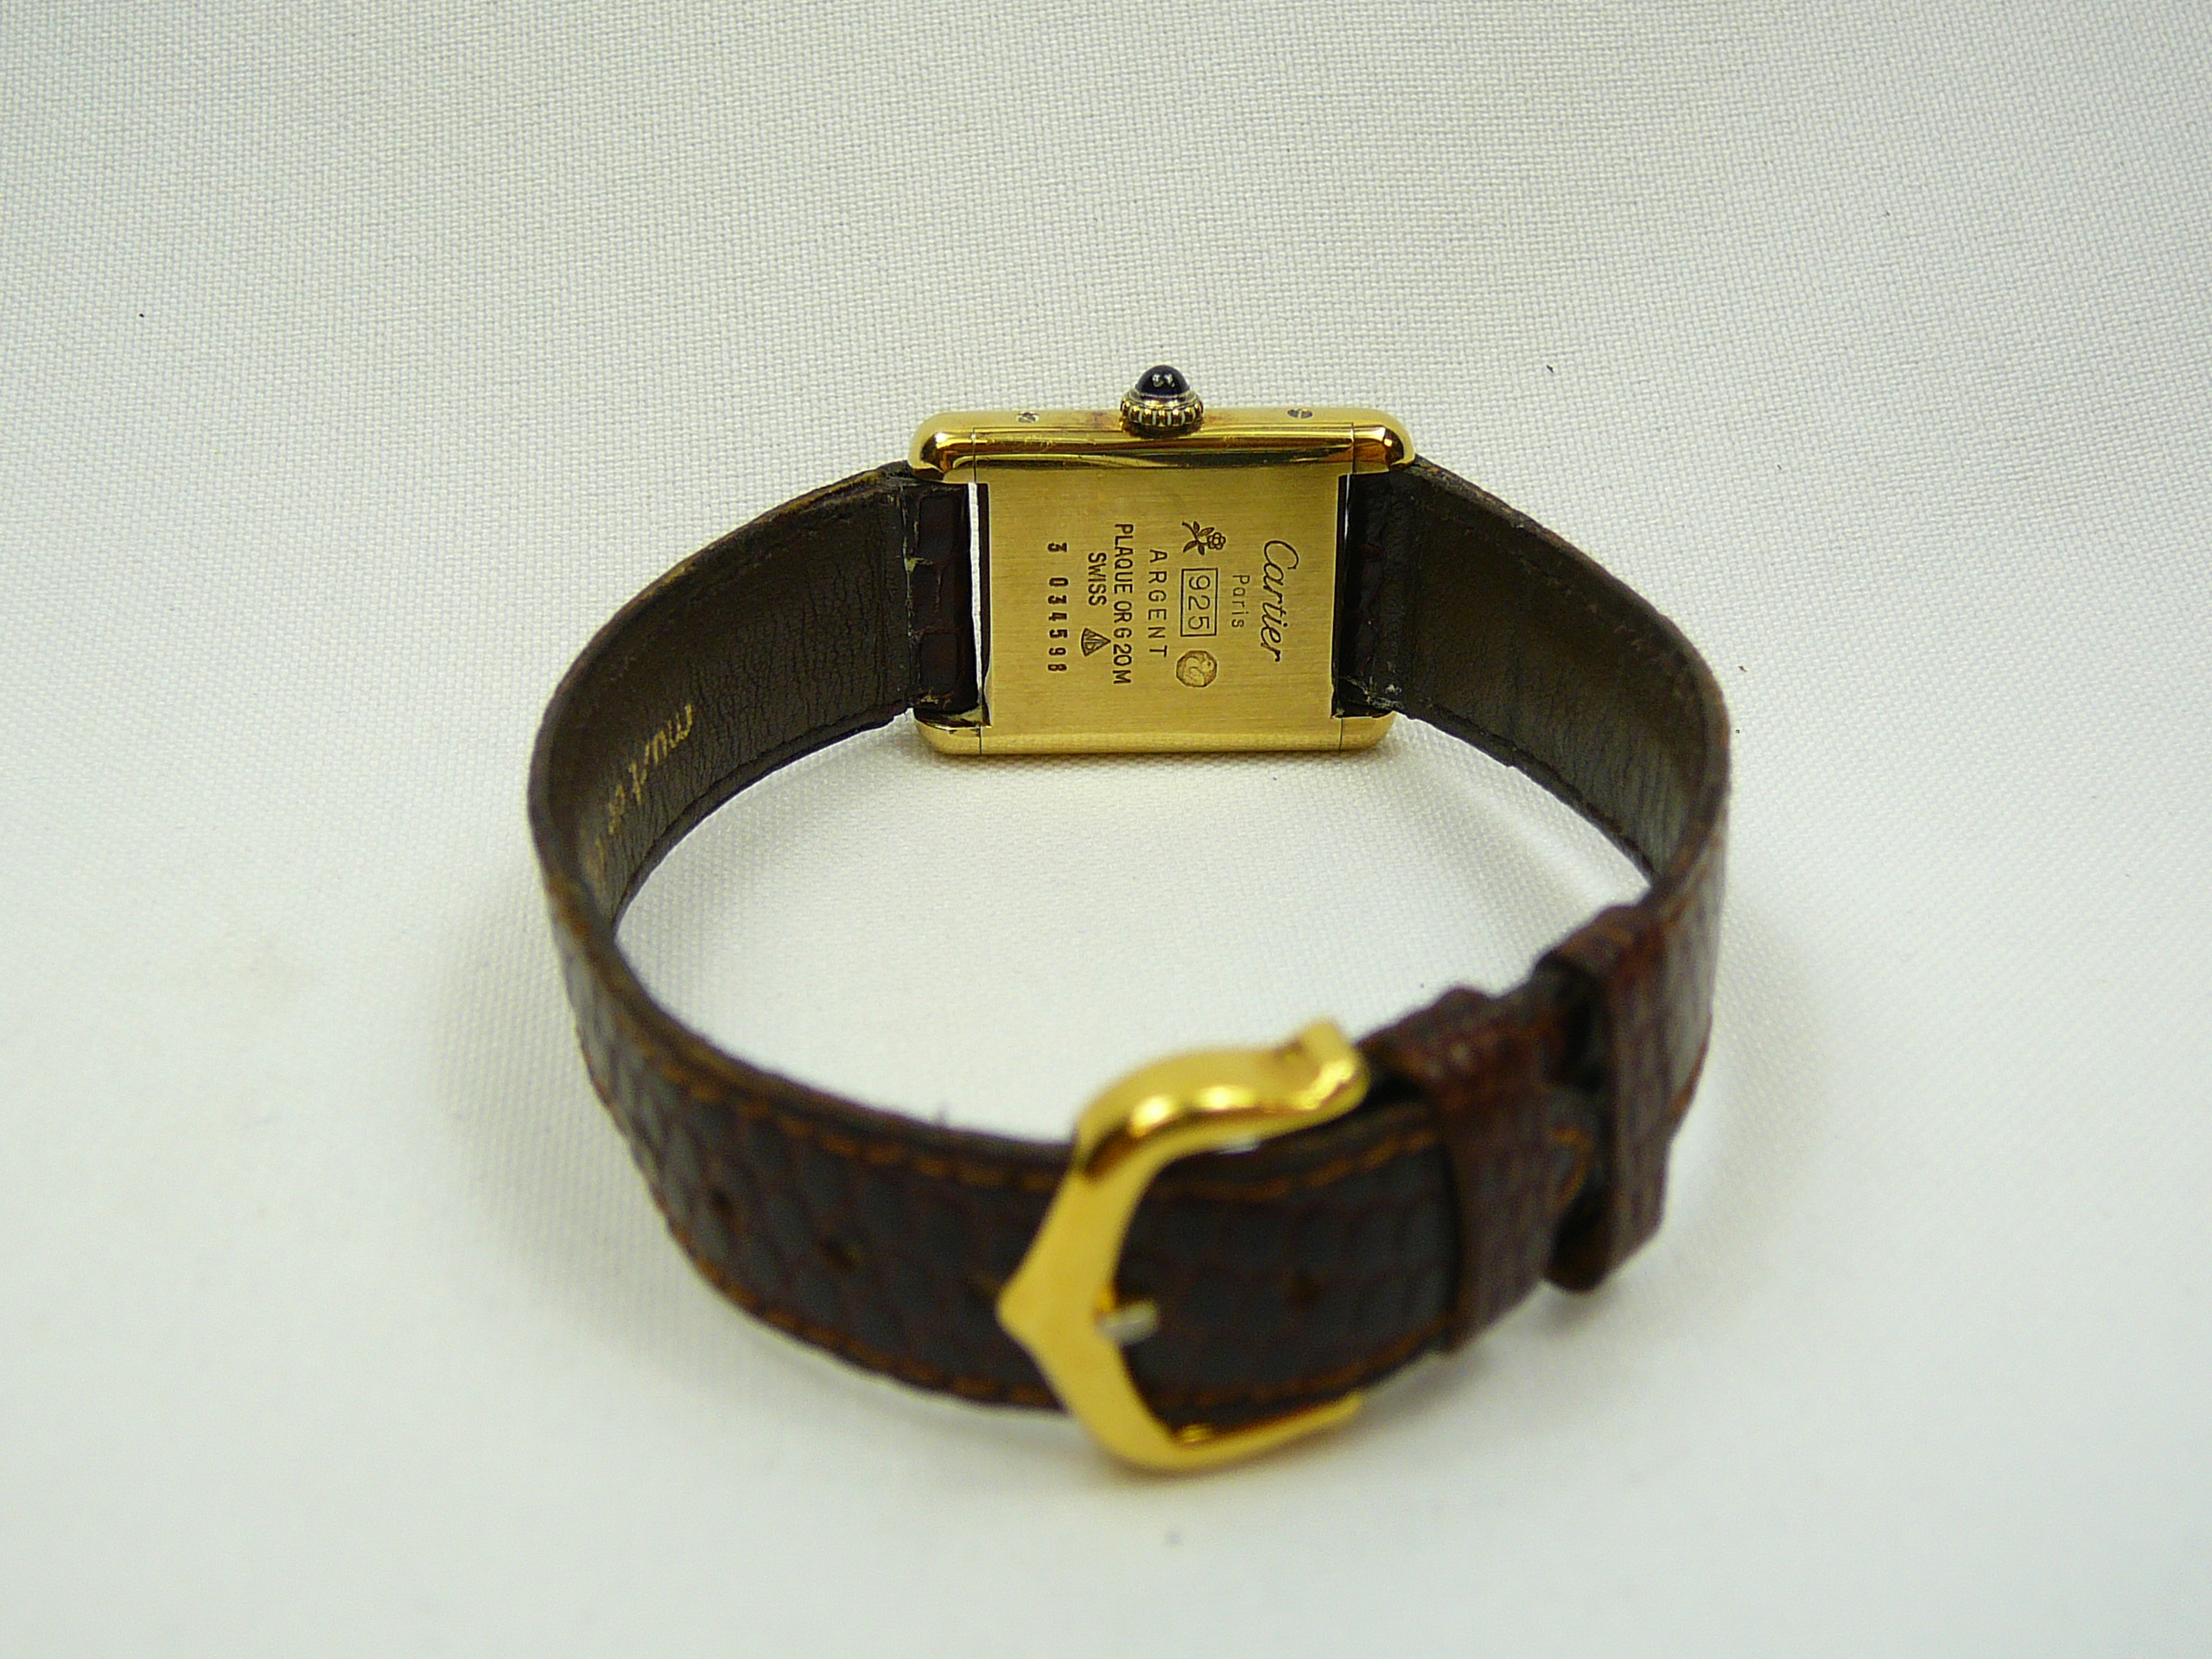 Ladies Cartier Gilt Silver Wrist Watch - Image 3 of 3